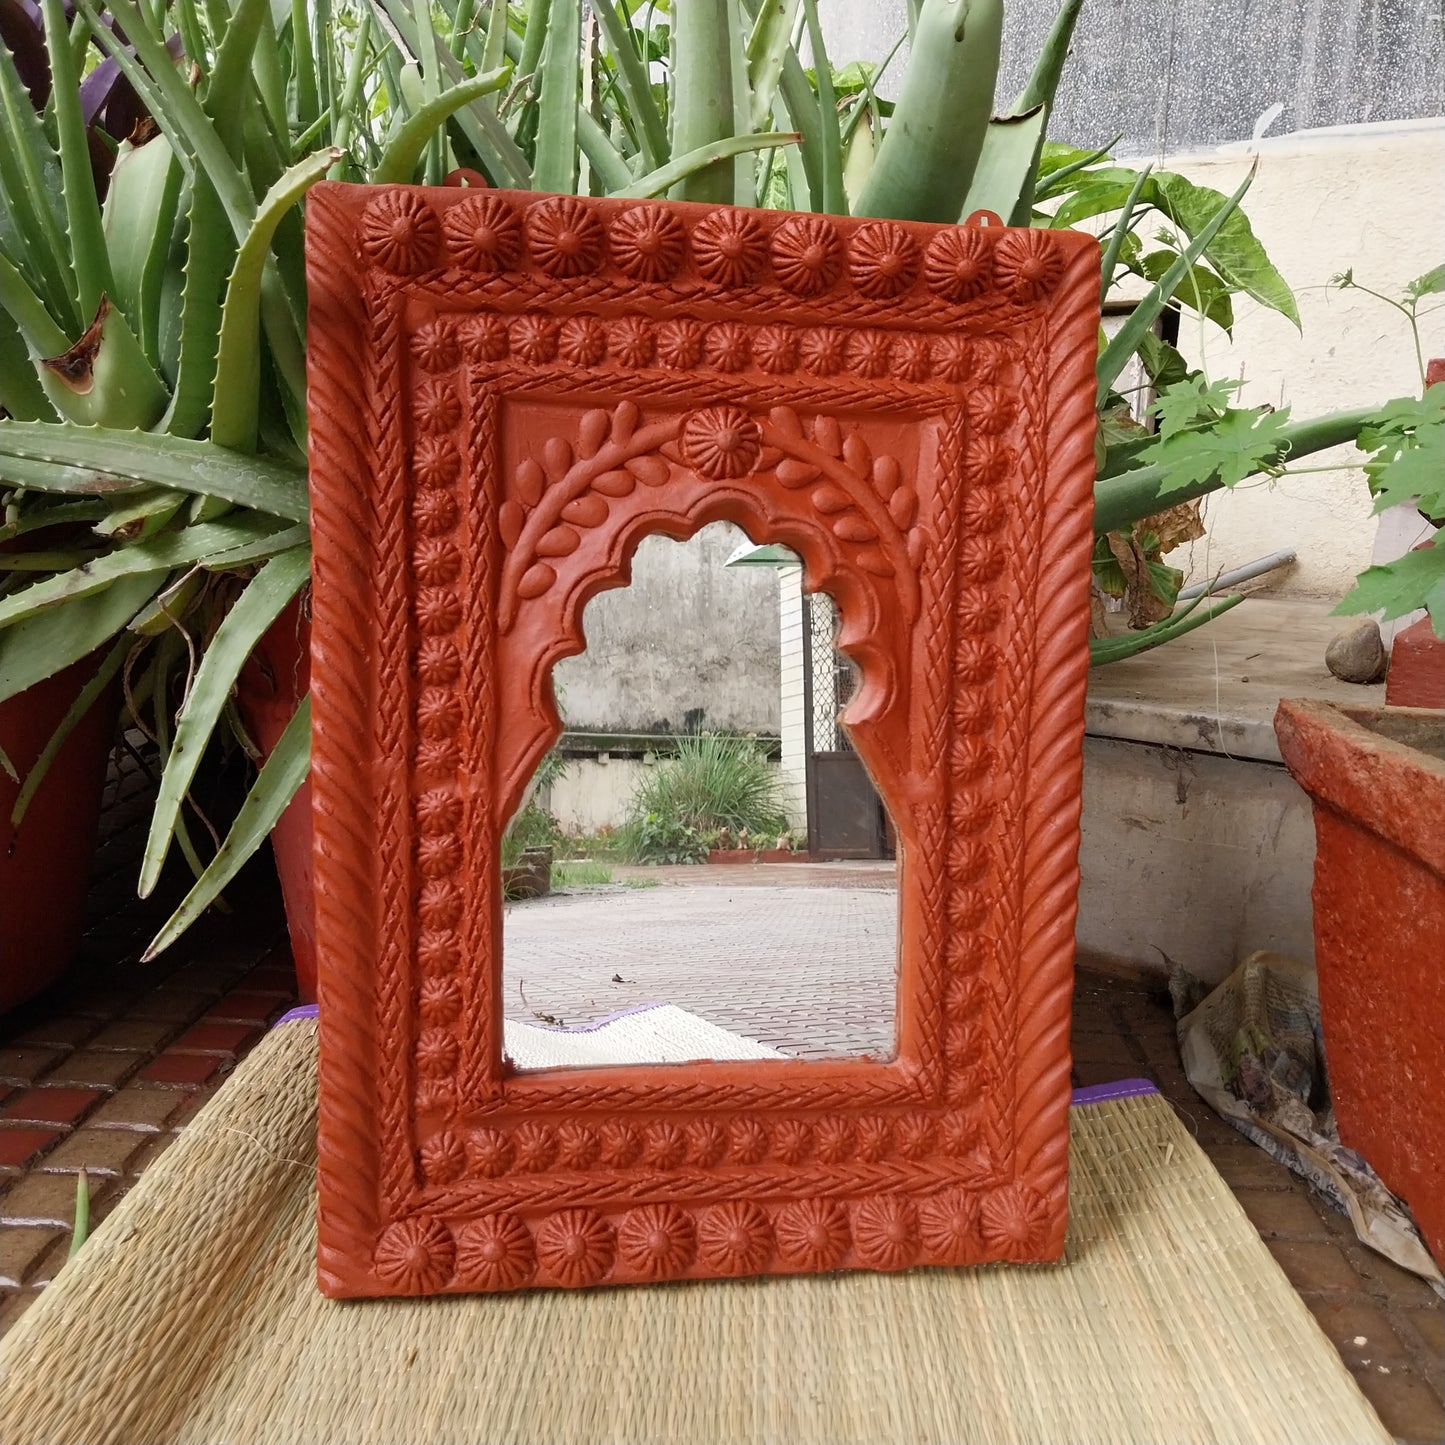 Mughal Mirror no. 1